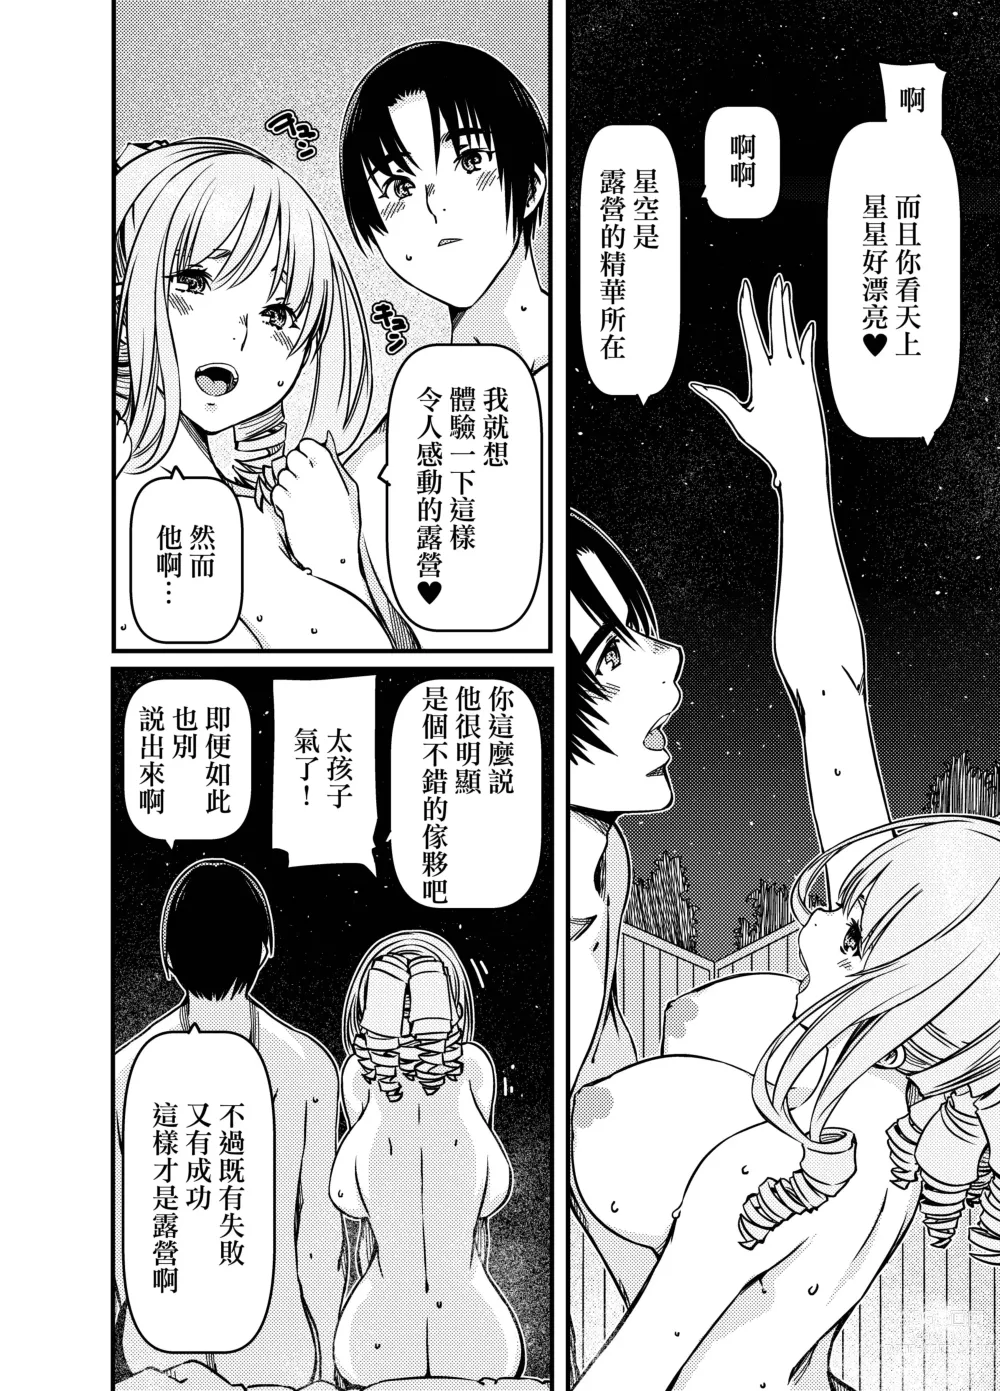 Page 13 of doujinshi 明明是個露營獨行俠卻被陽光辣妹貼上來了